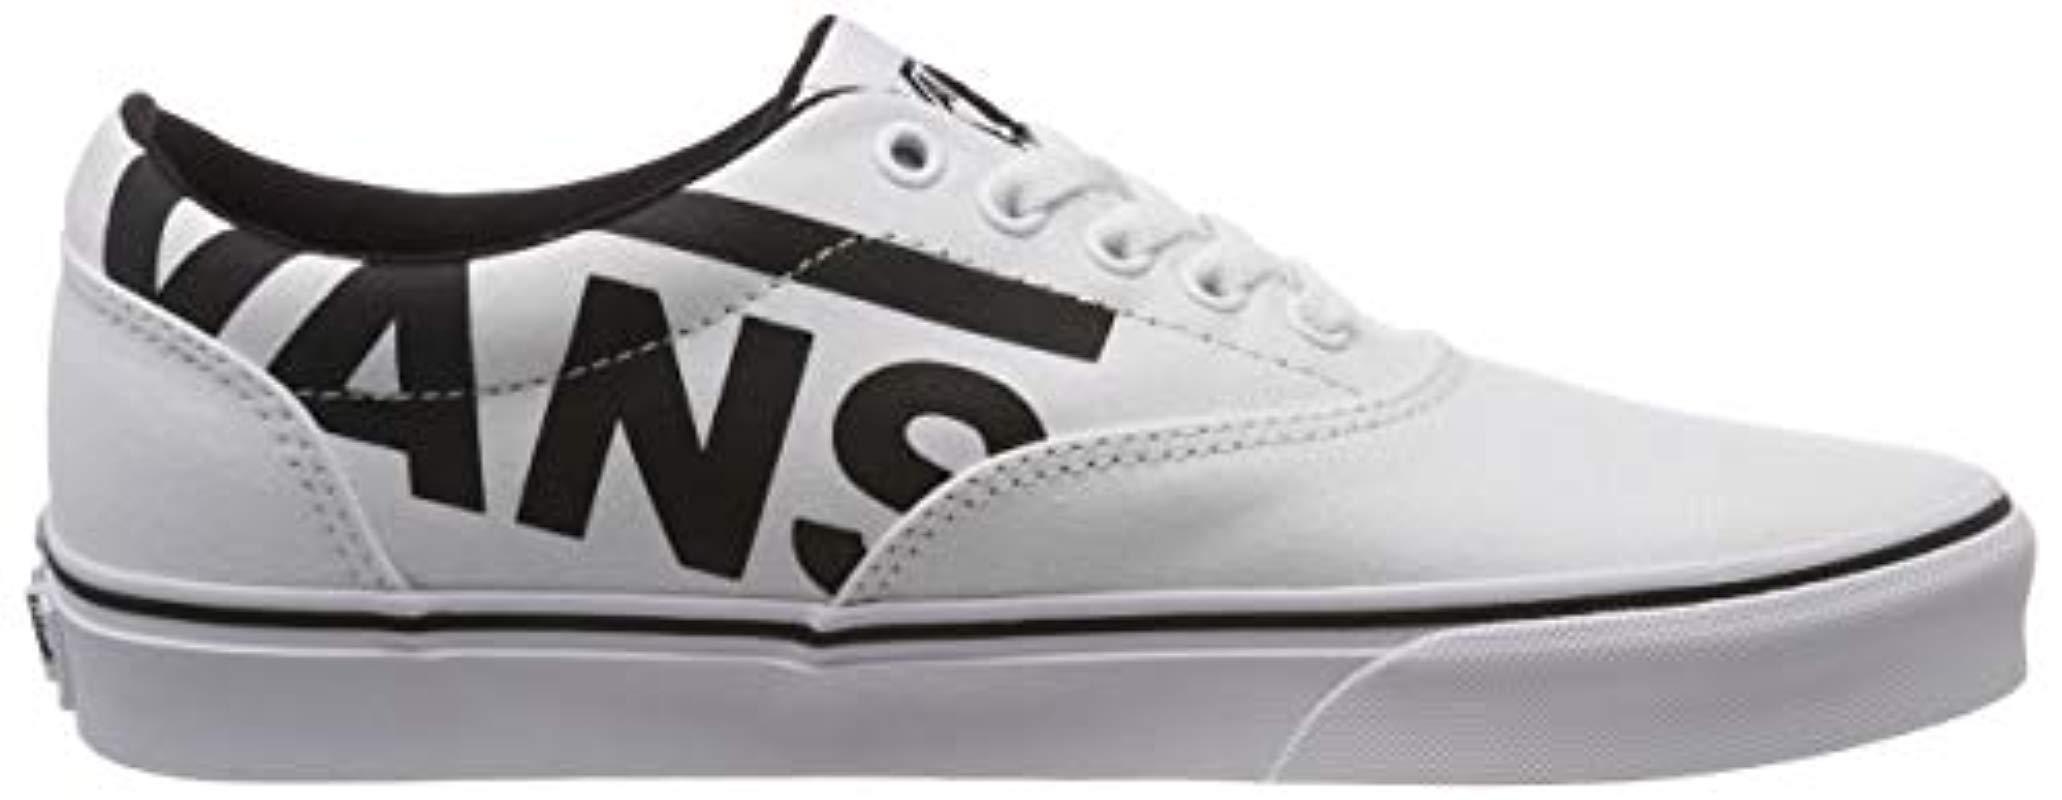 Vans Doheny Big Logo Low-top Sneakers in White for Men - Lyst